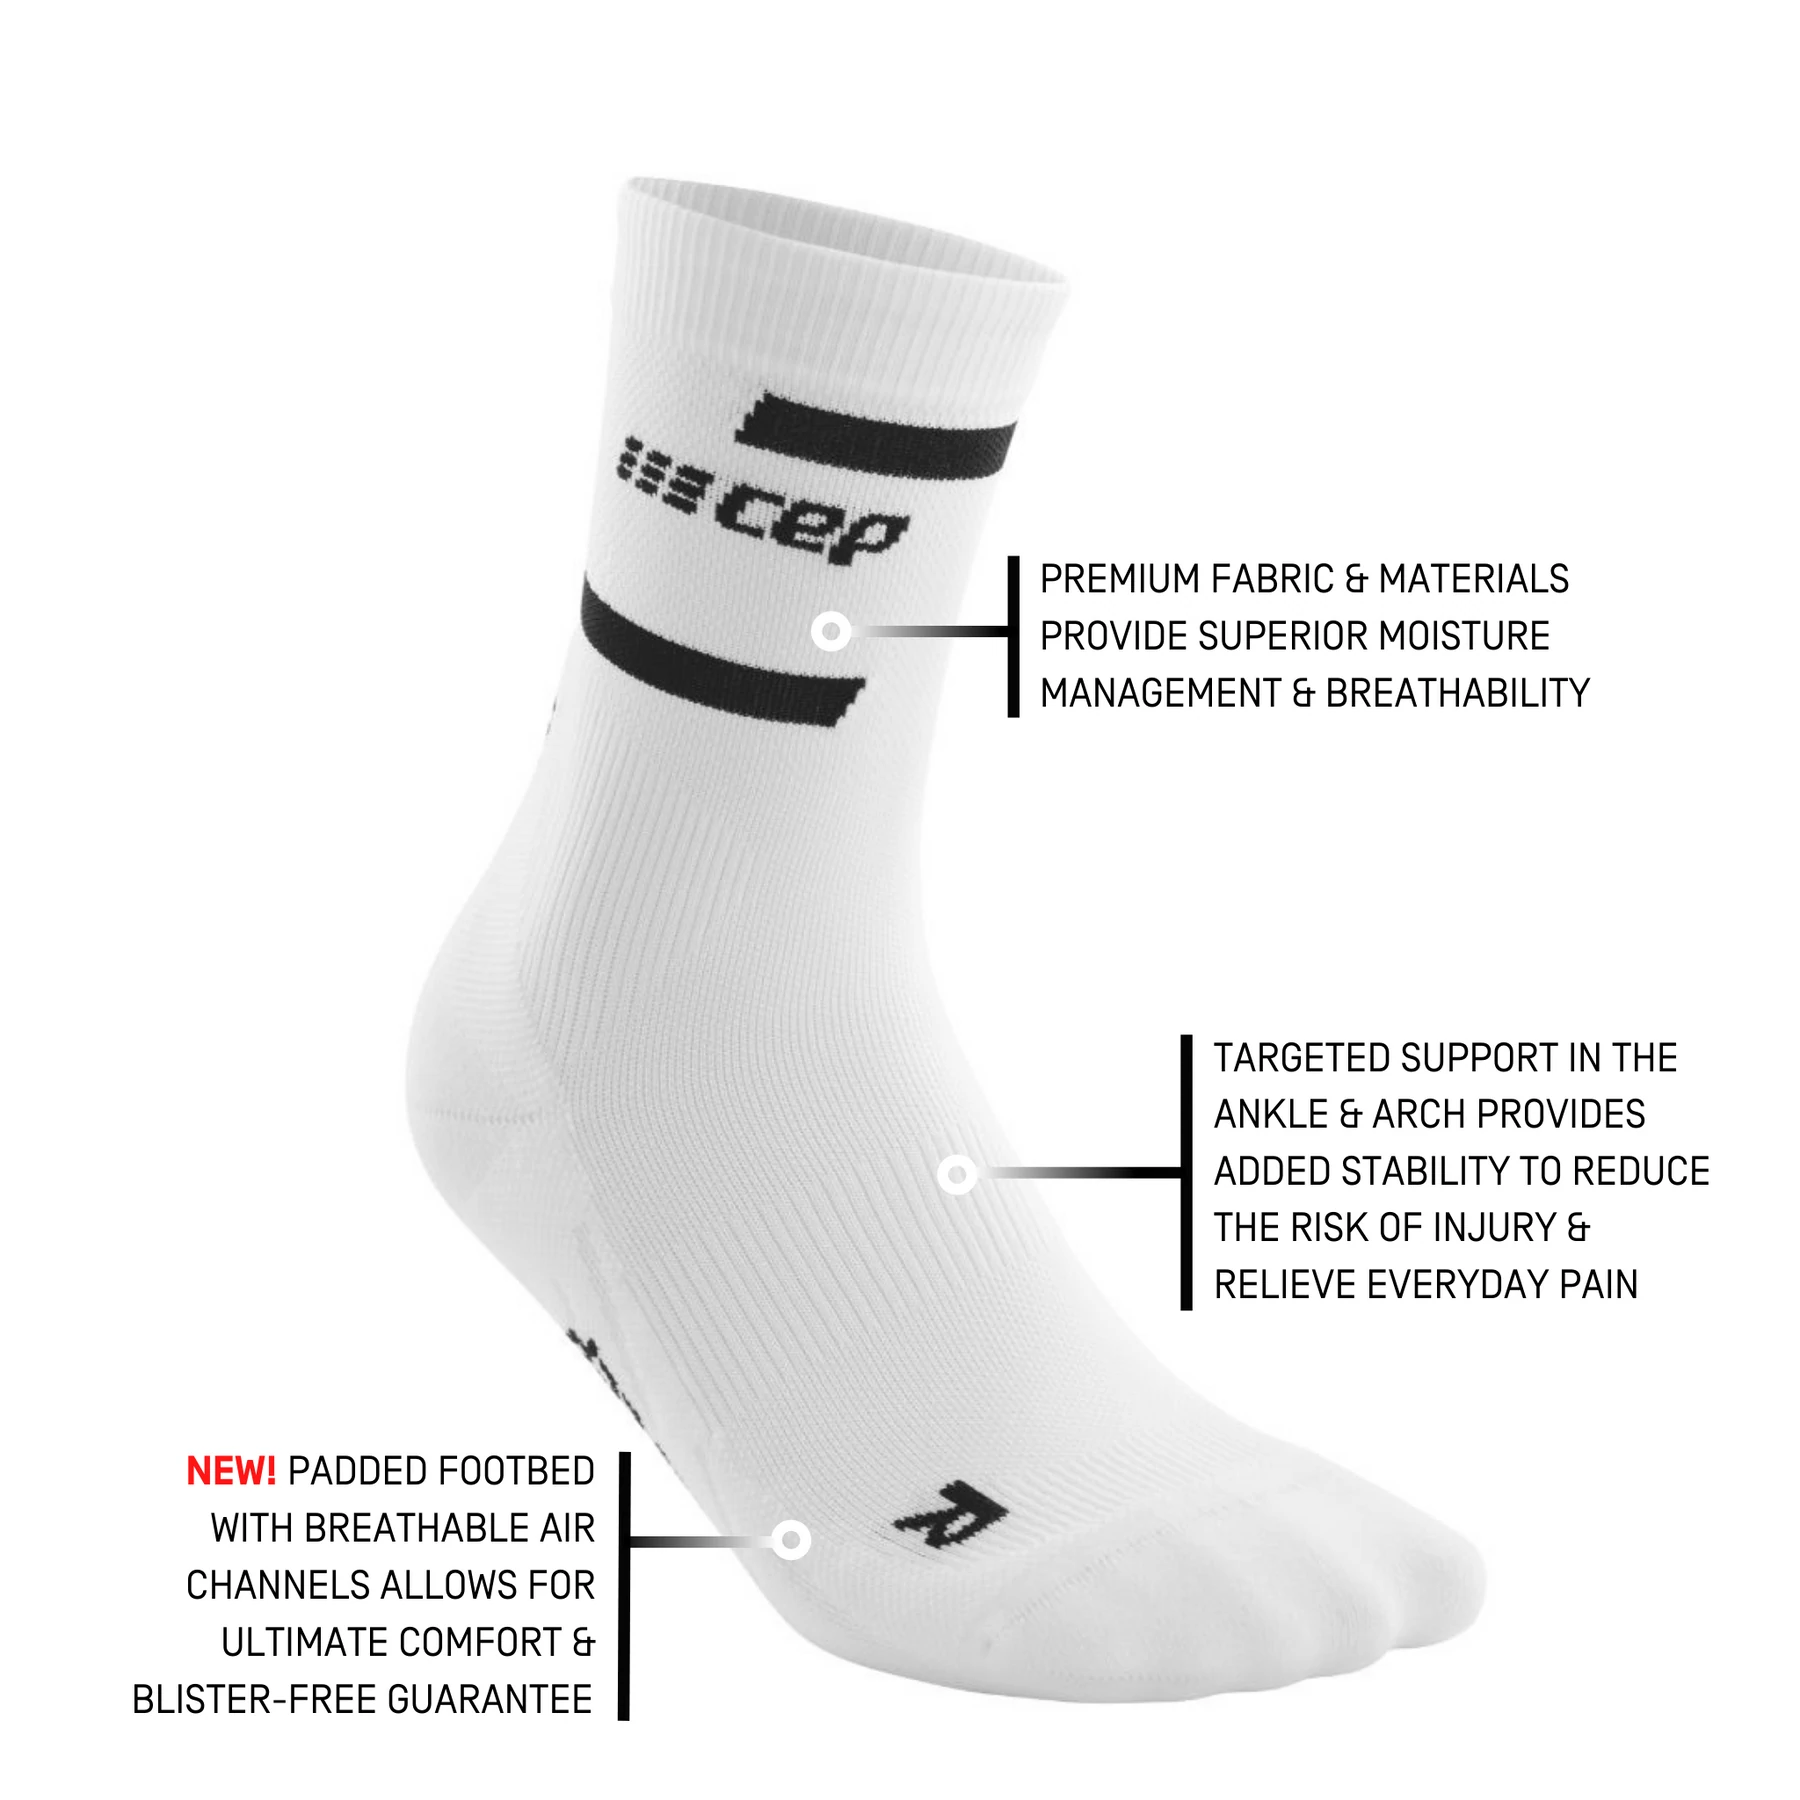 CEP Women's Mid Cut Compression Socks 4.0 – Portland Running Company